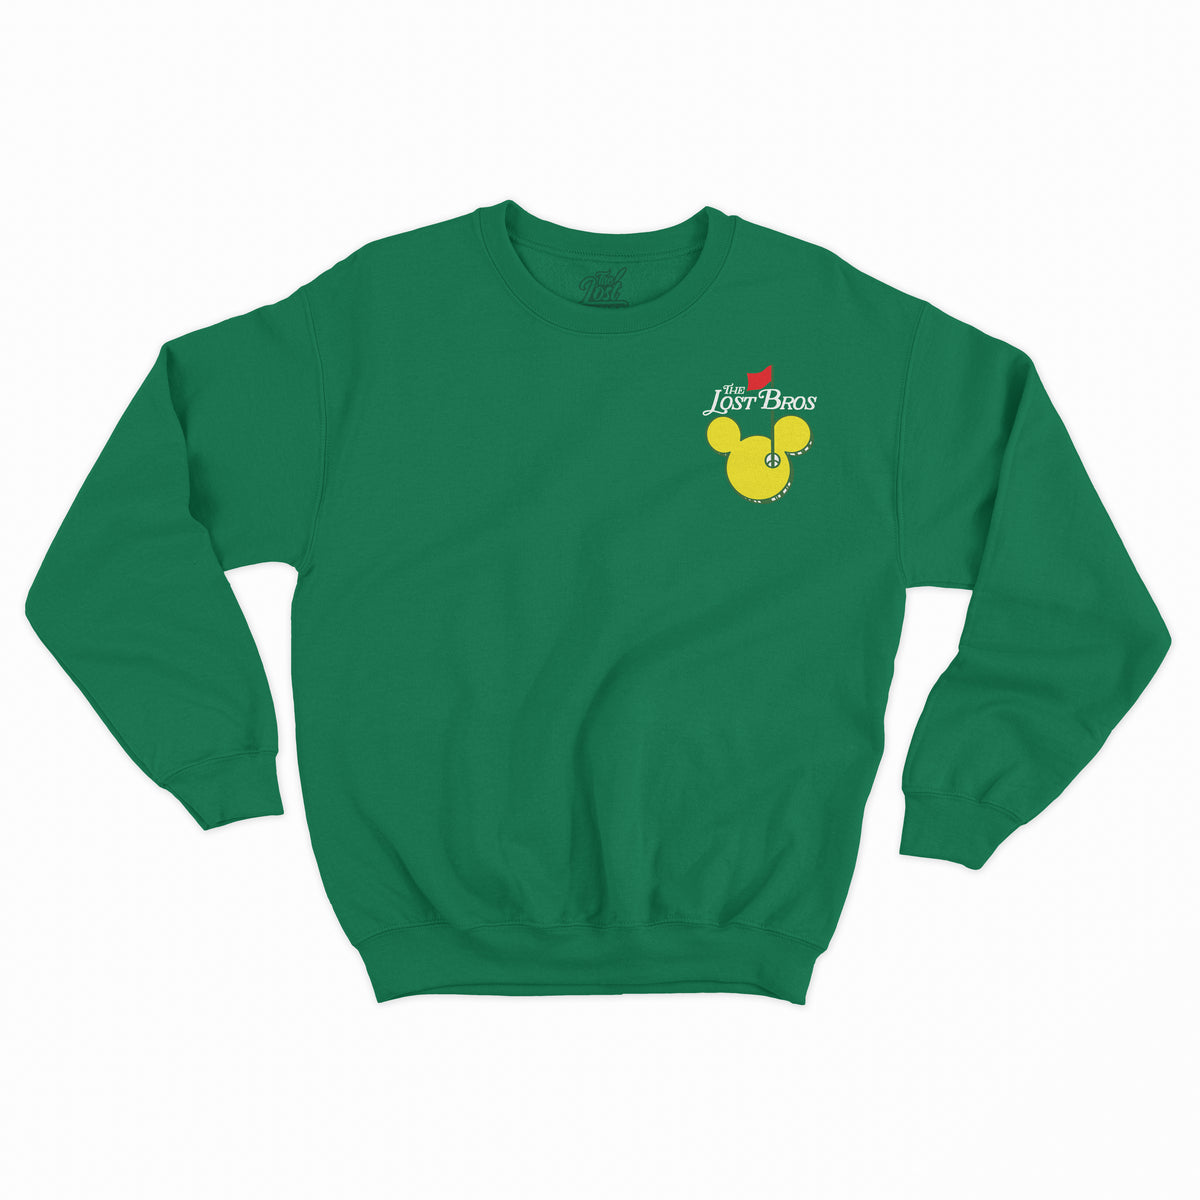 The Lost Bros Masters Golf Sweatshirt